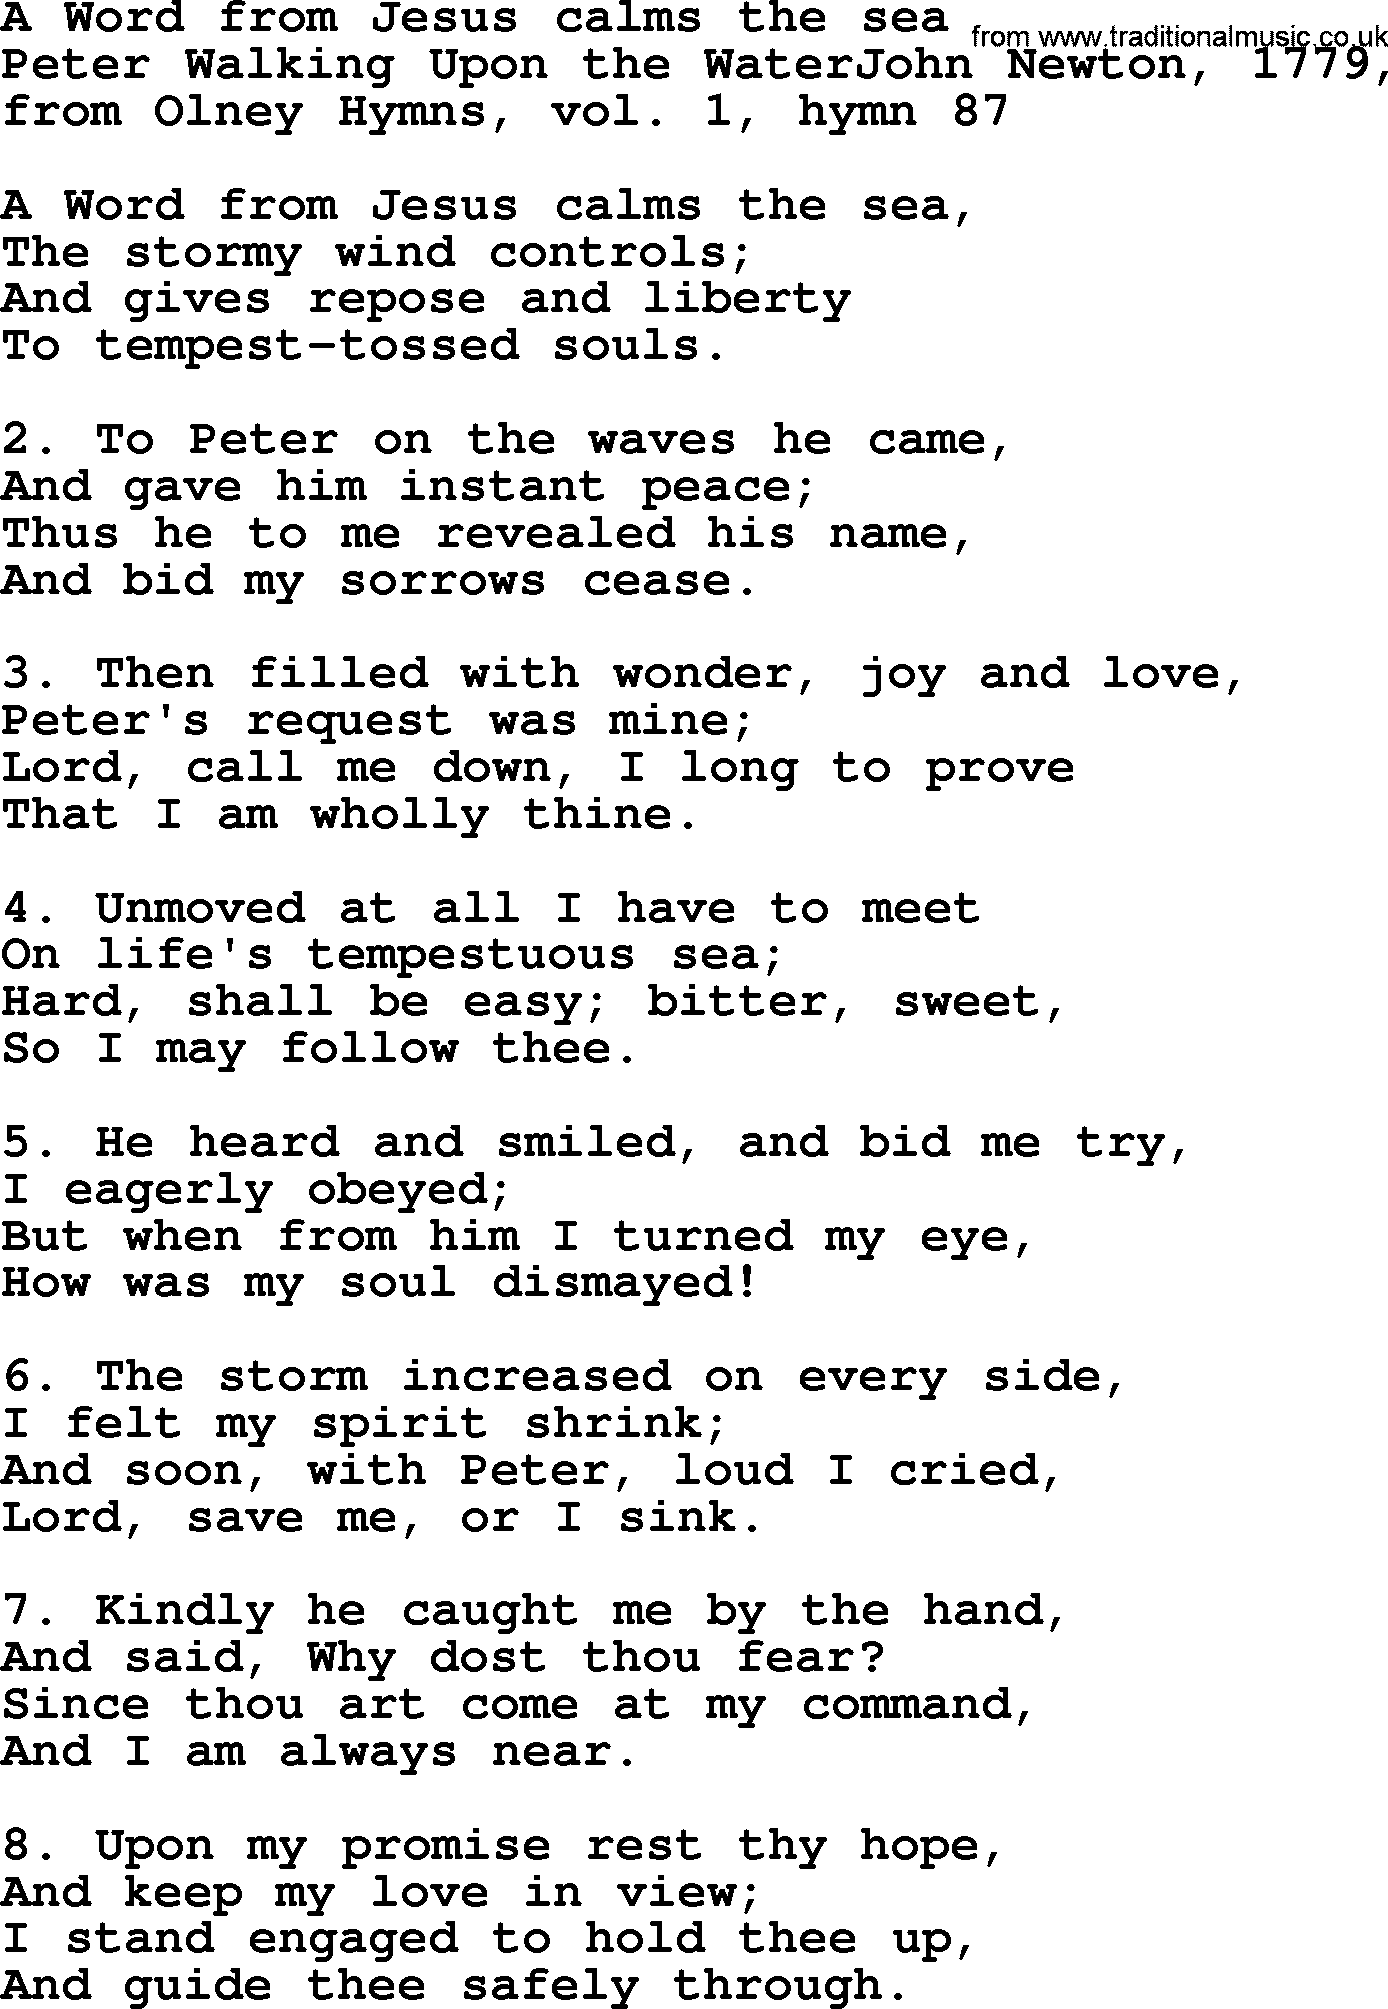 John Newton hymn: A Word From Jesus Calms The Sea, lyrics